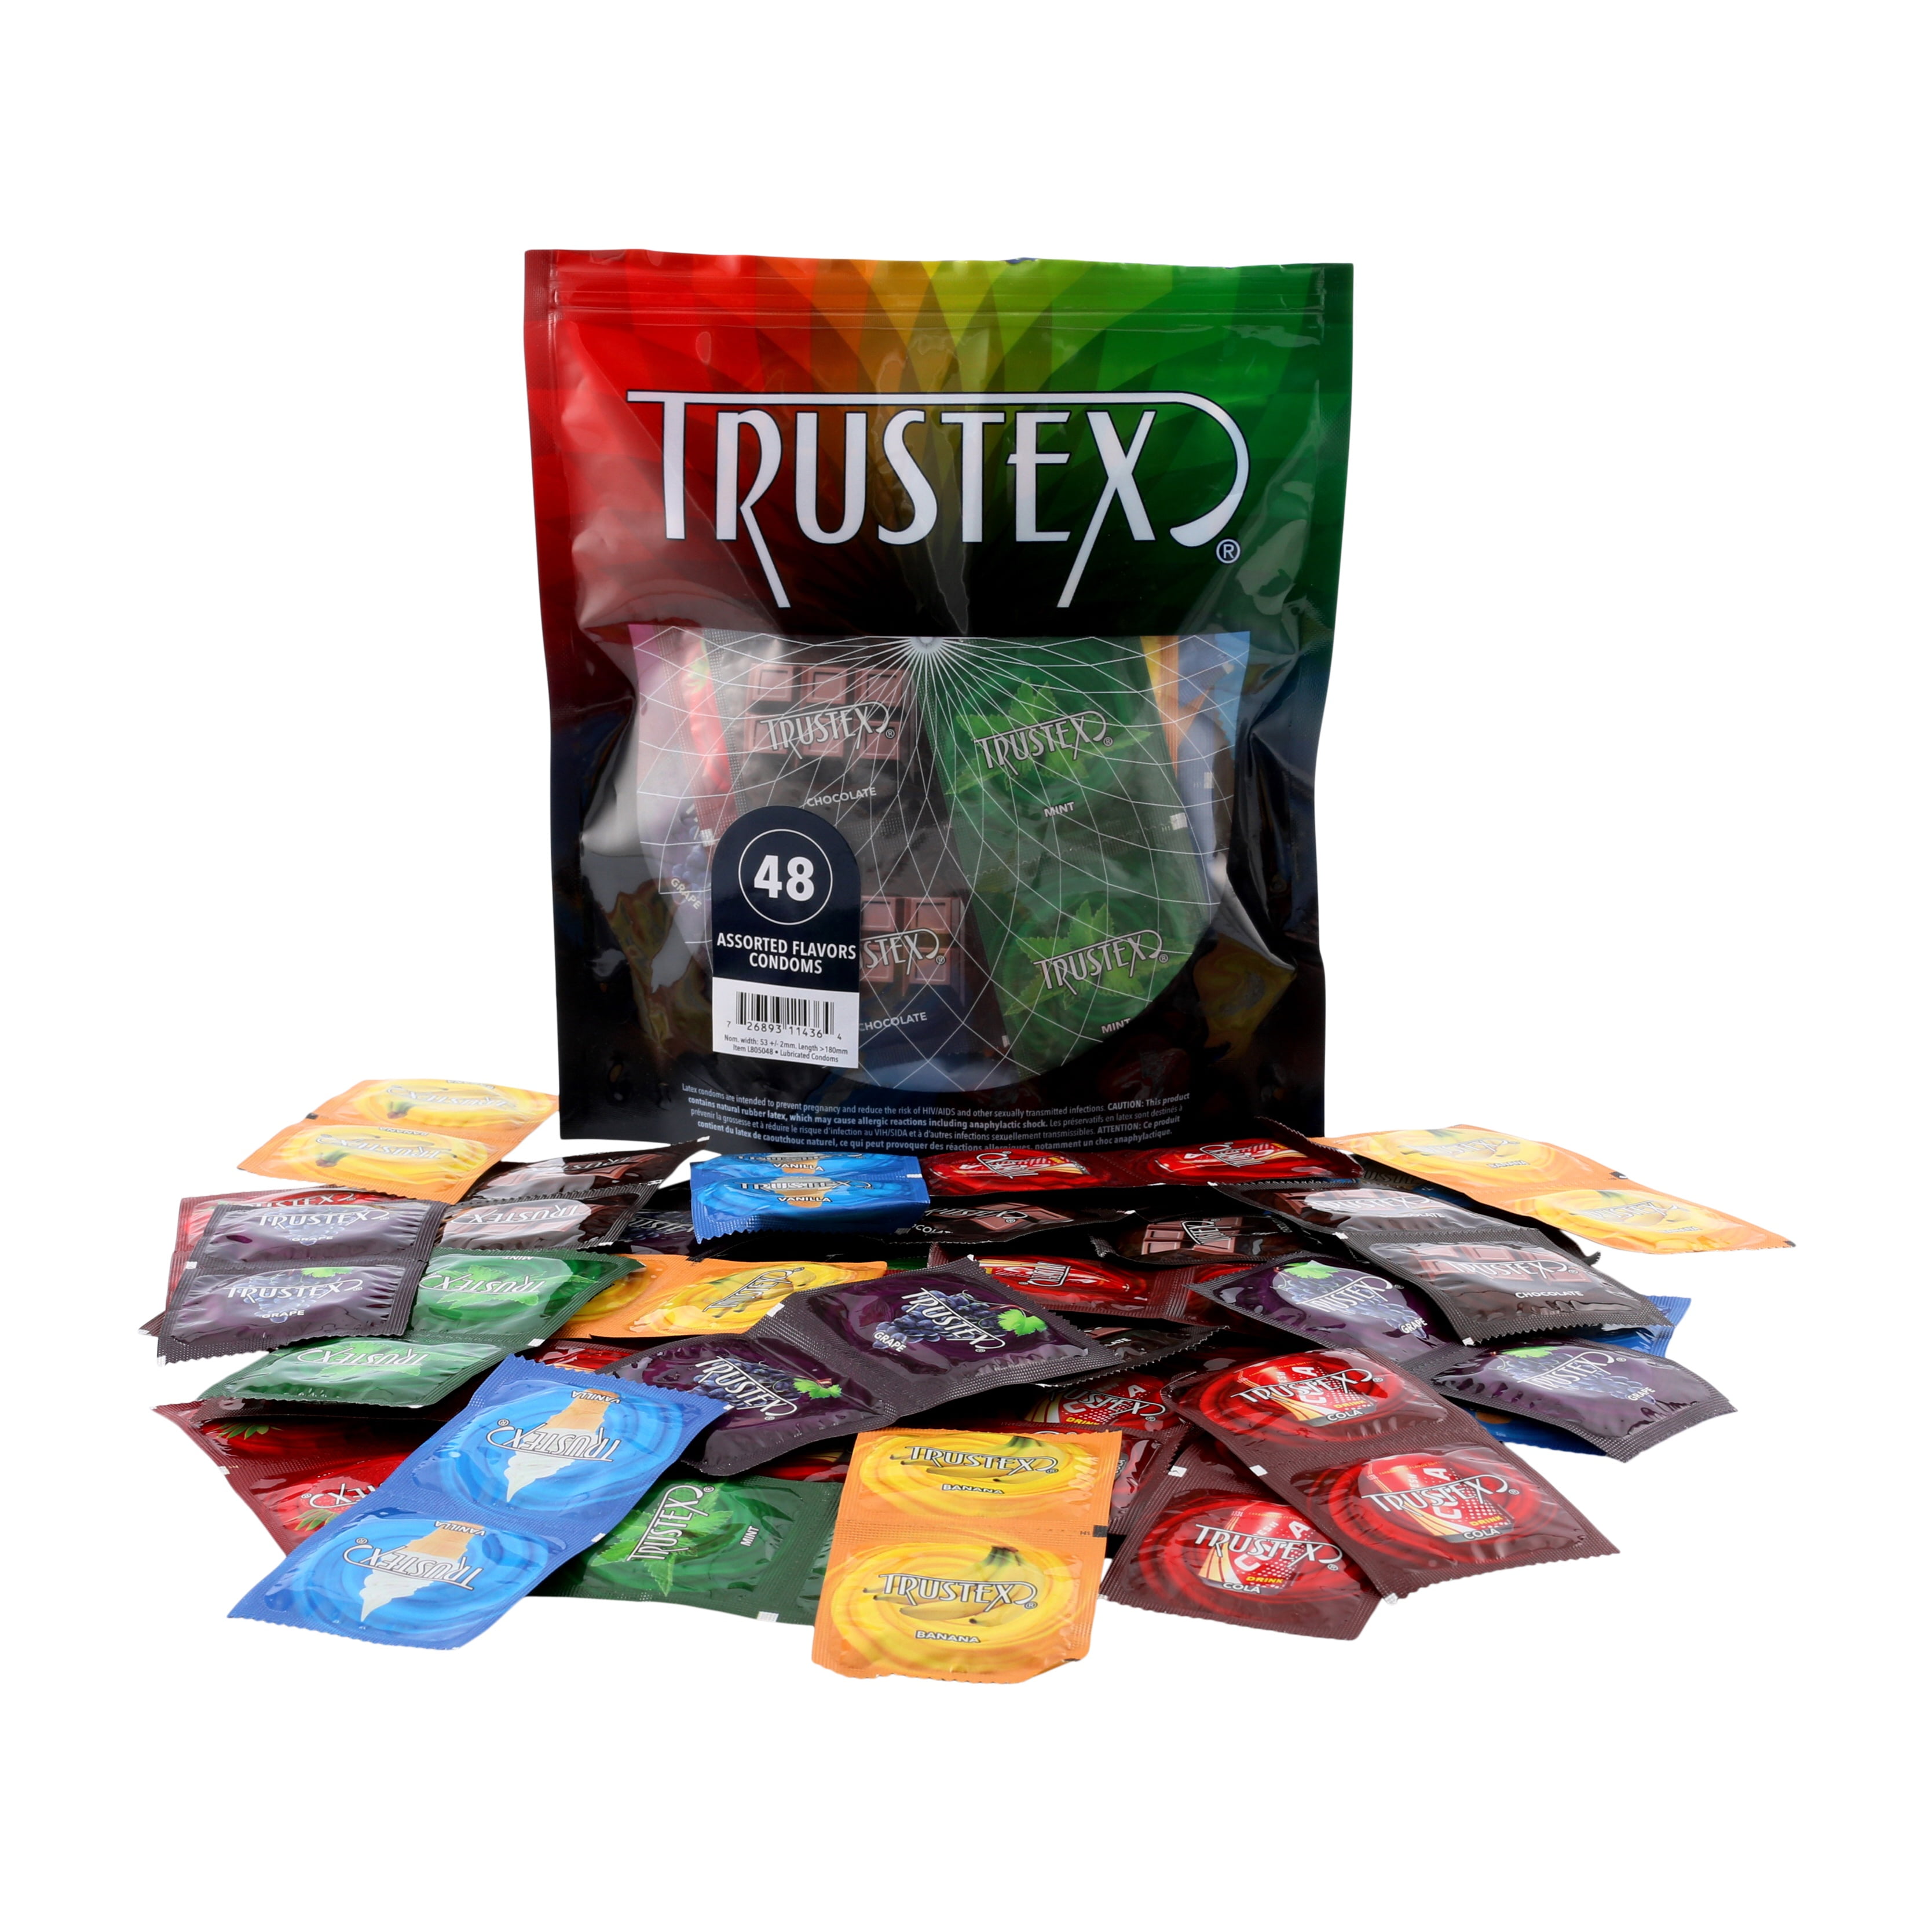 Trustex Assorted Flavors, Premium Latex Flavored Condoms, The Original Flavored Condom Company, Safe for Intercourse, Bag of 48 picture